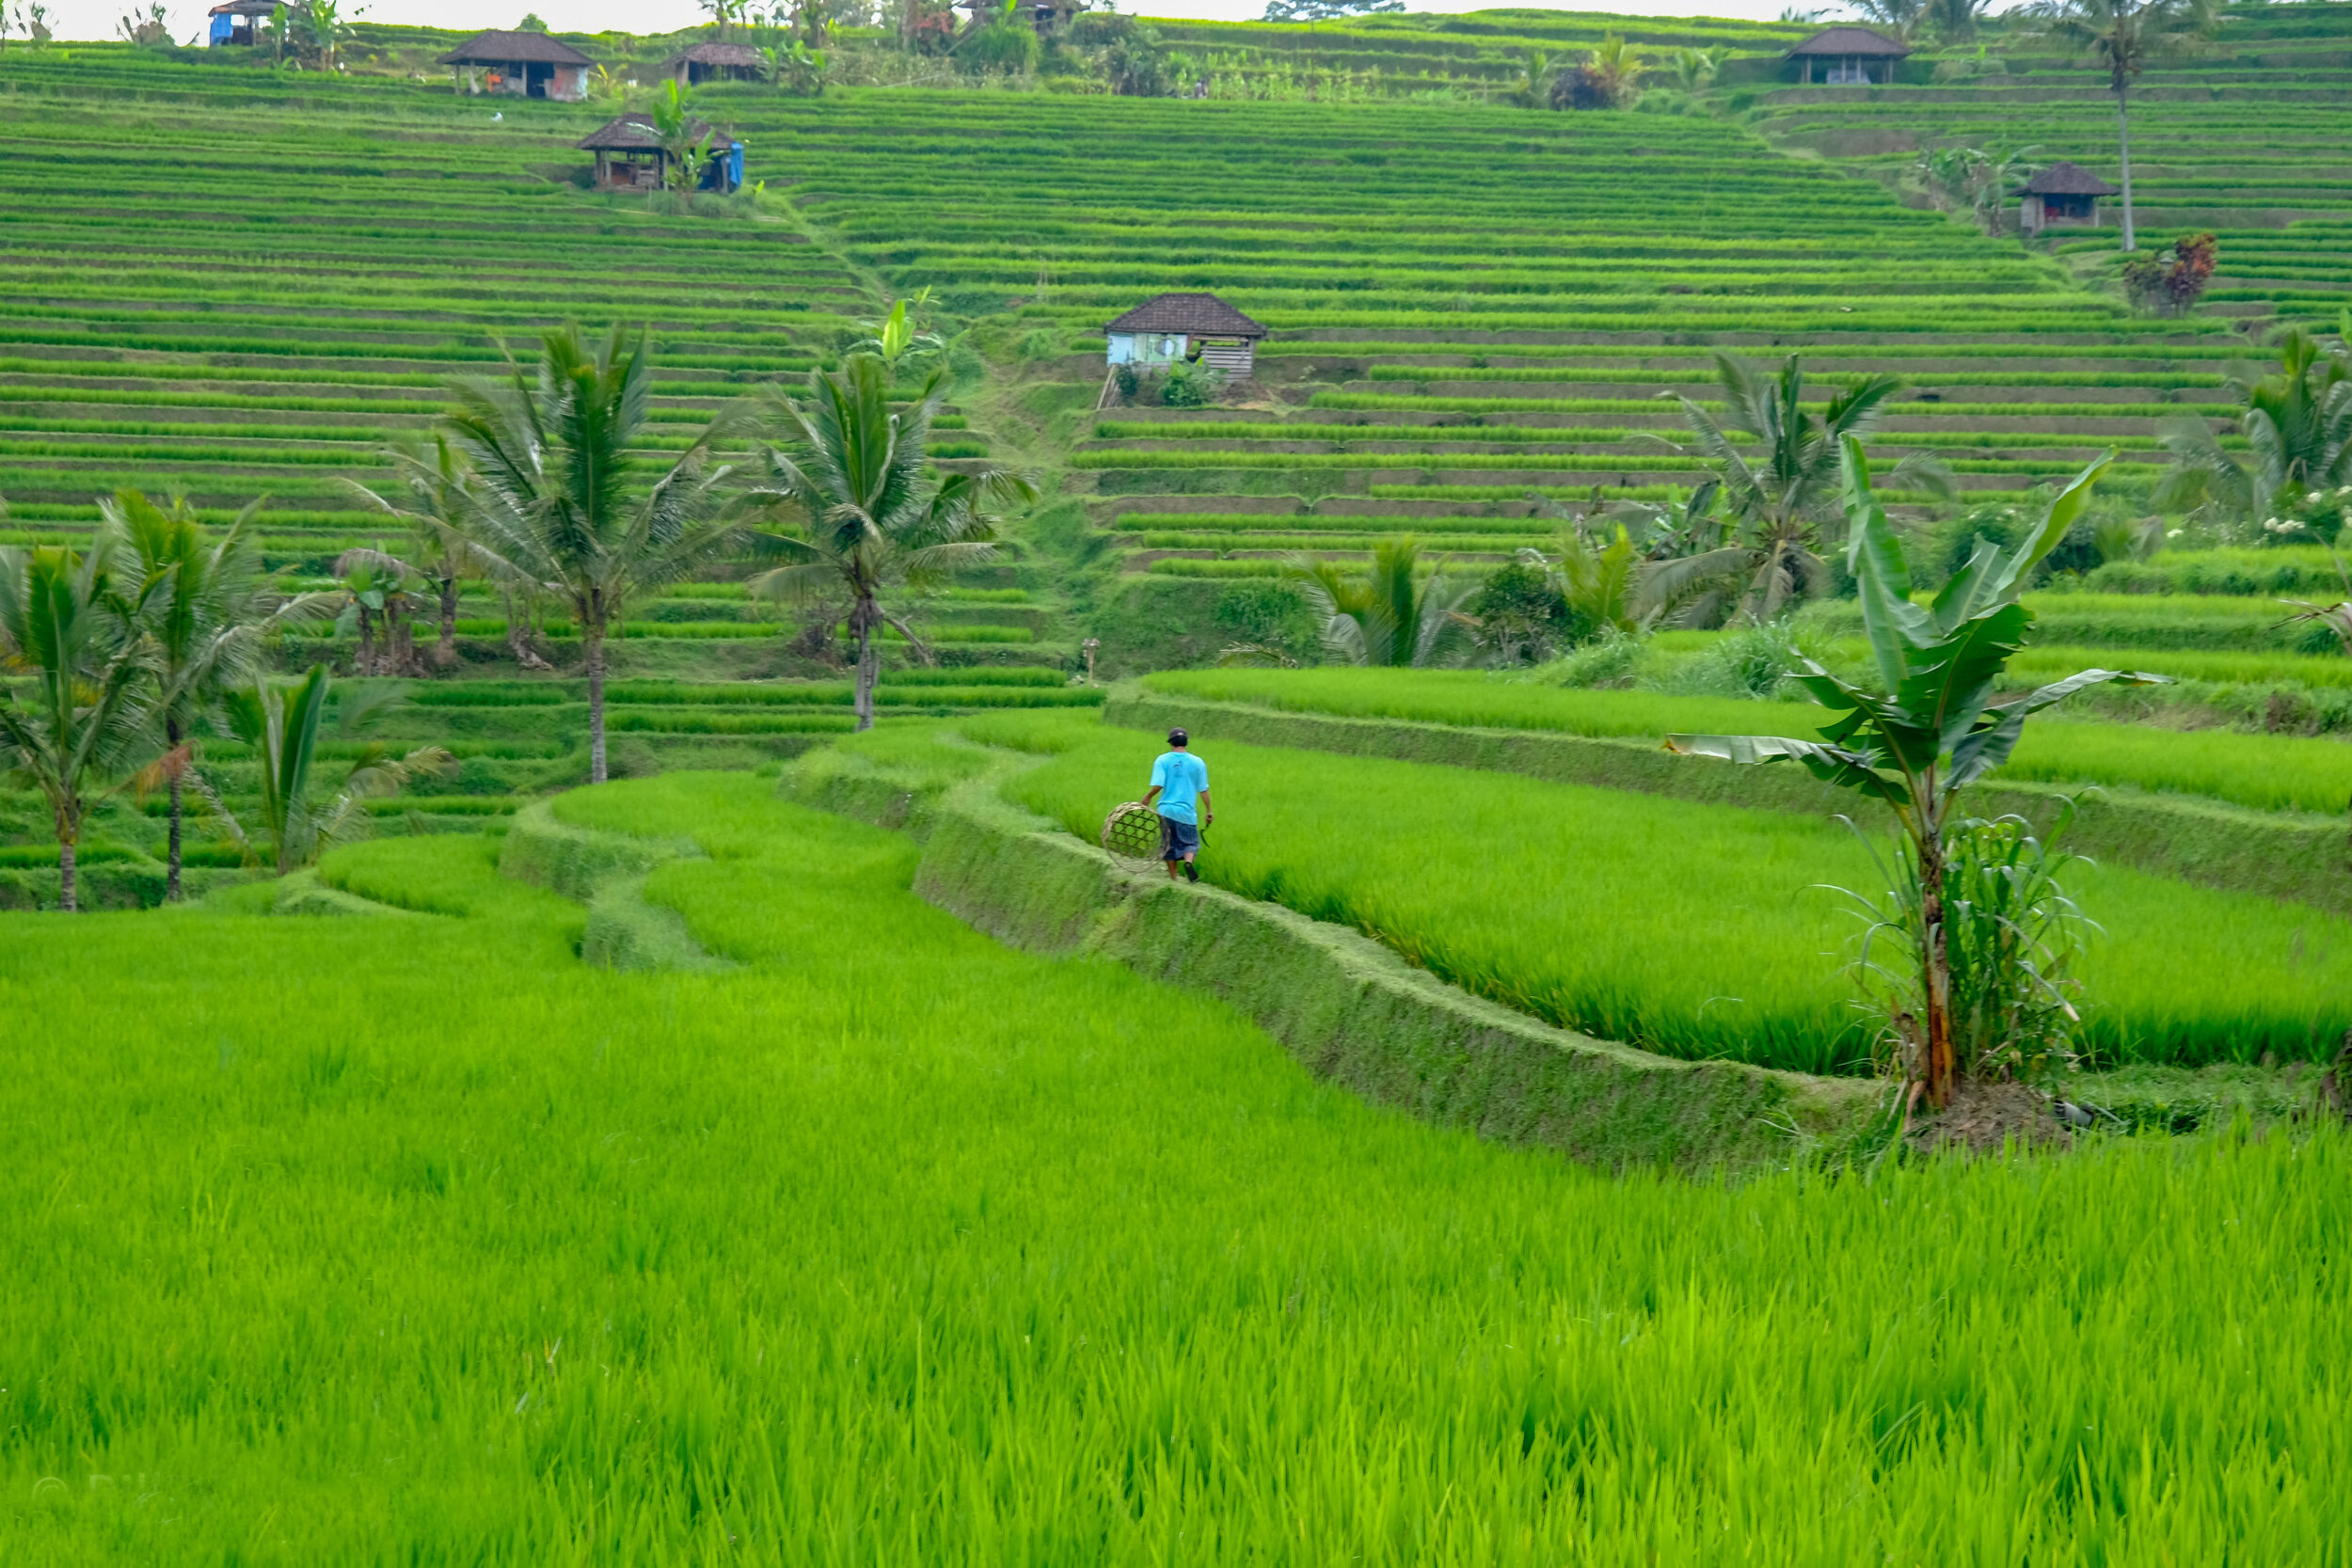  Jatiluwih Rice Terraces, Bali, Indonesia         